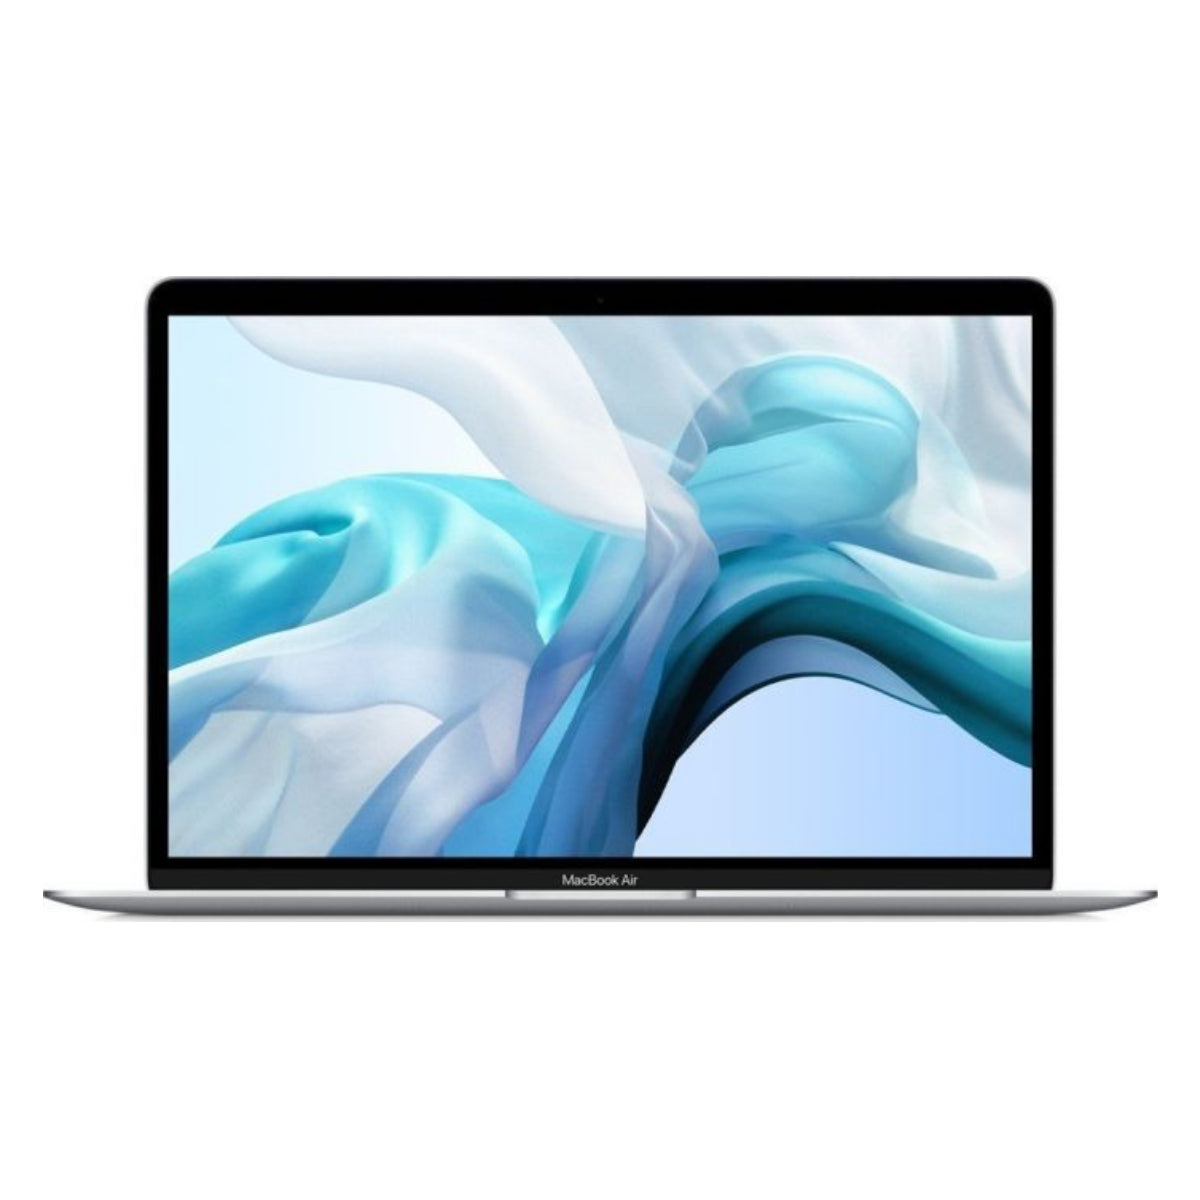 MacBook Air 13-inch i5 1.6 9th gen 8GB 256GB - test-product-media-liquid1